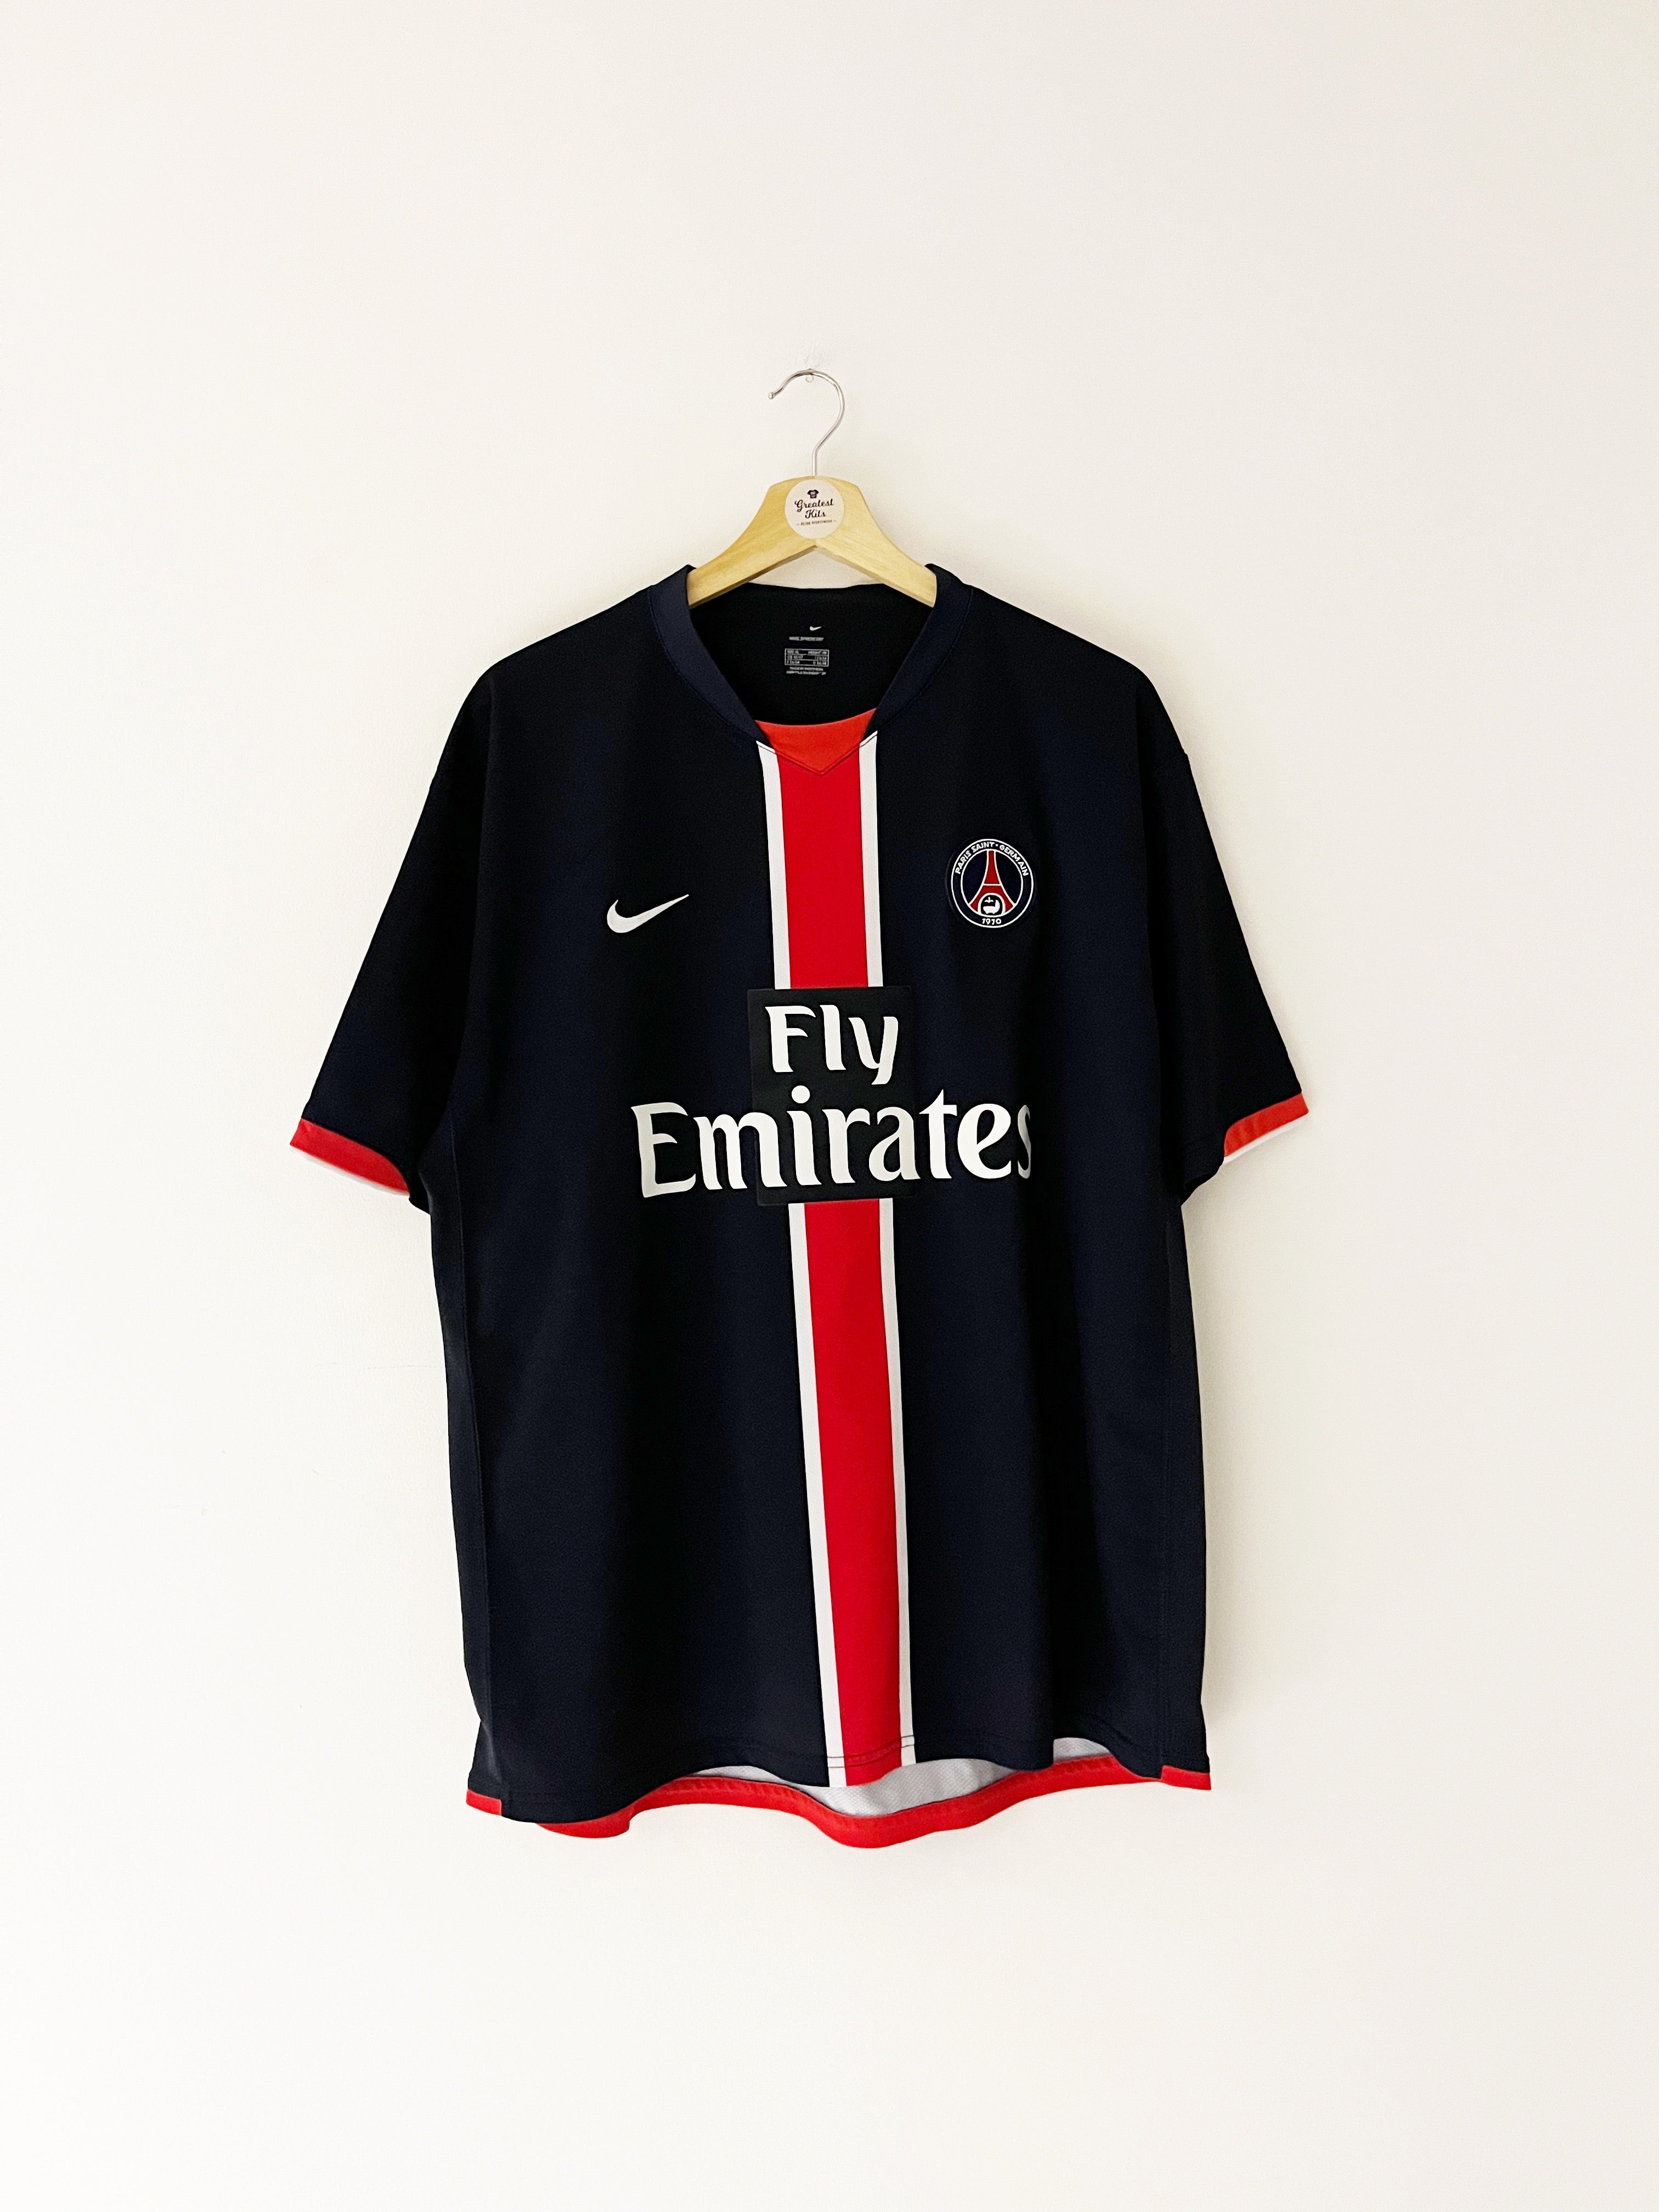 Paris Saint-Germain Home football shirt 2007 - 2008.